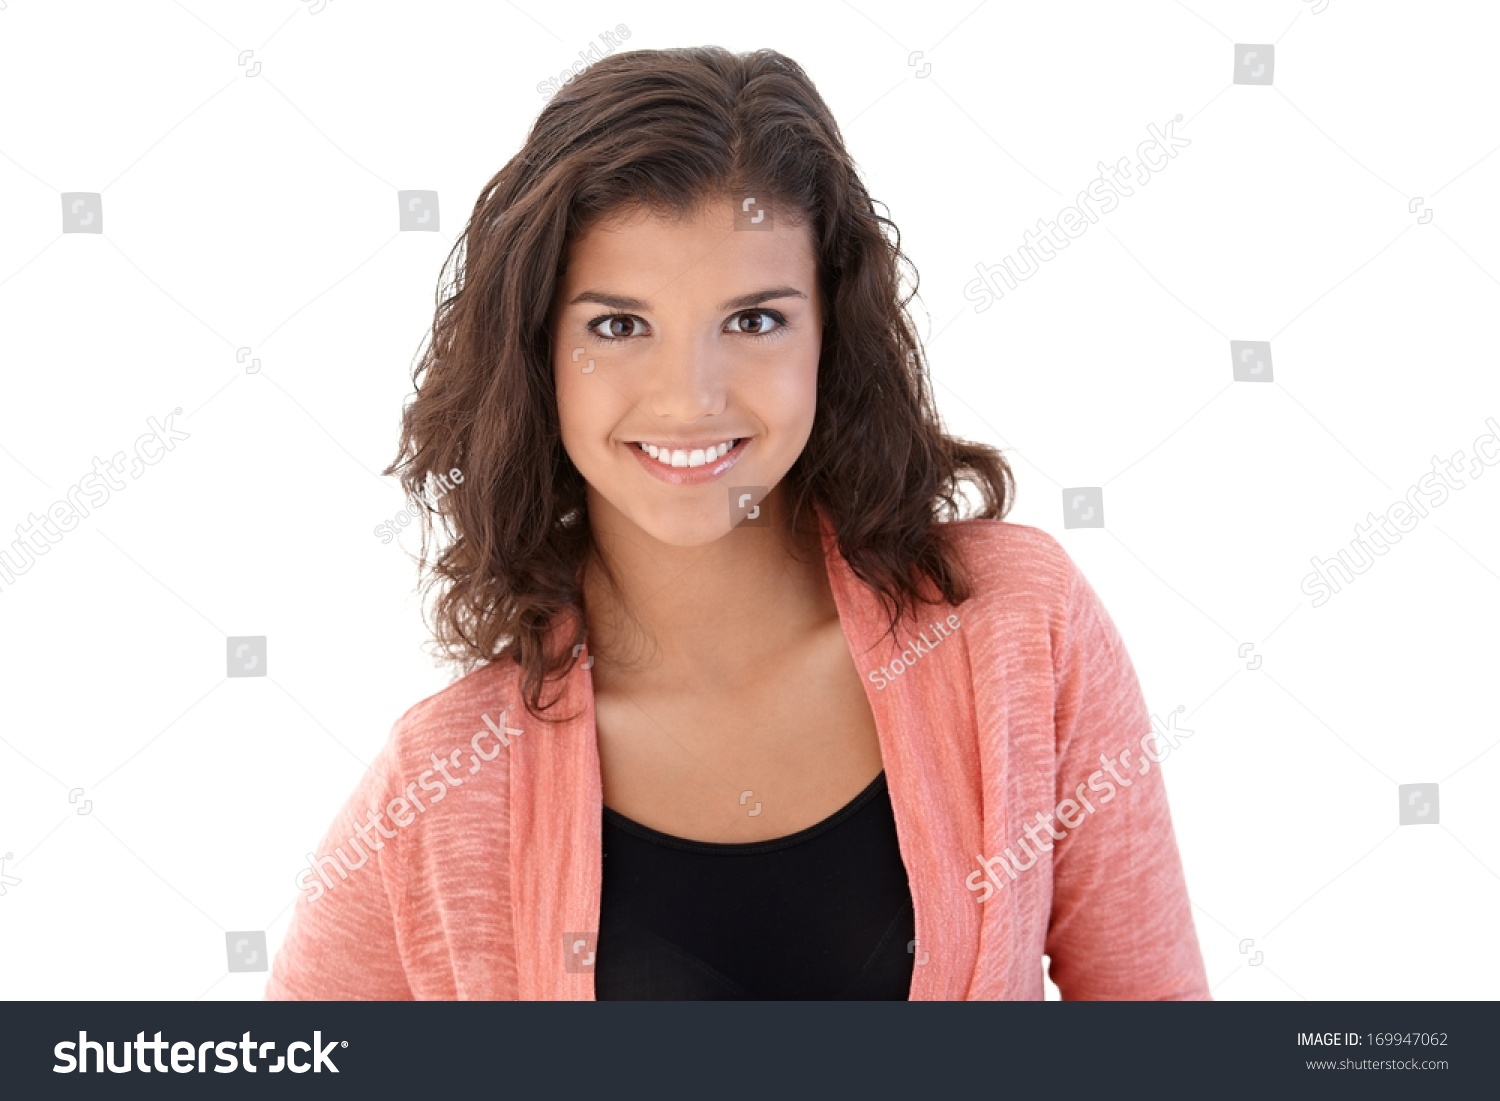 Portrait of smiling attractive schoolgirl, looking at camera. #169947062